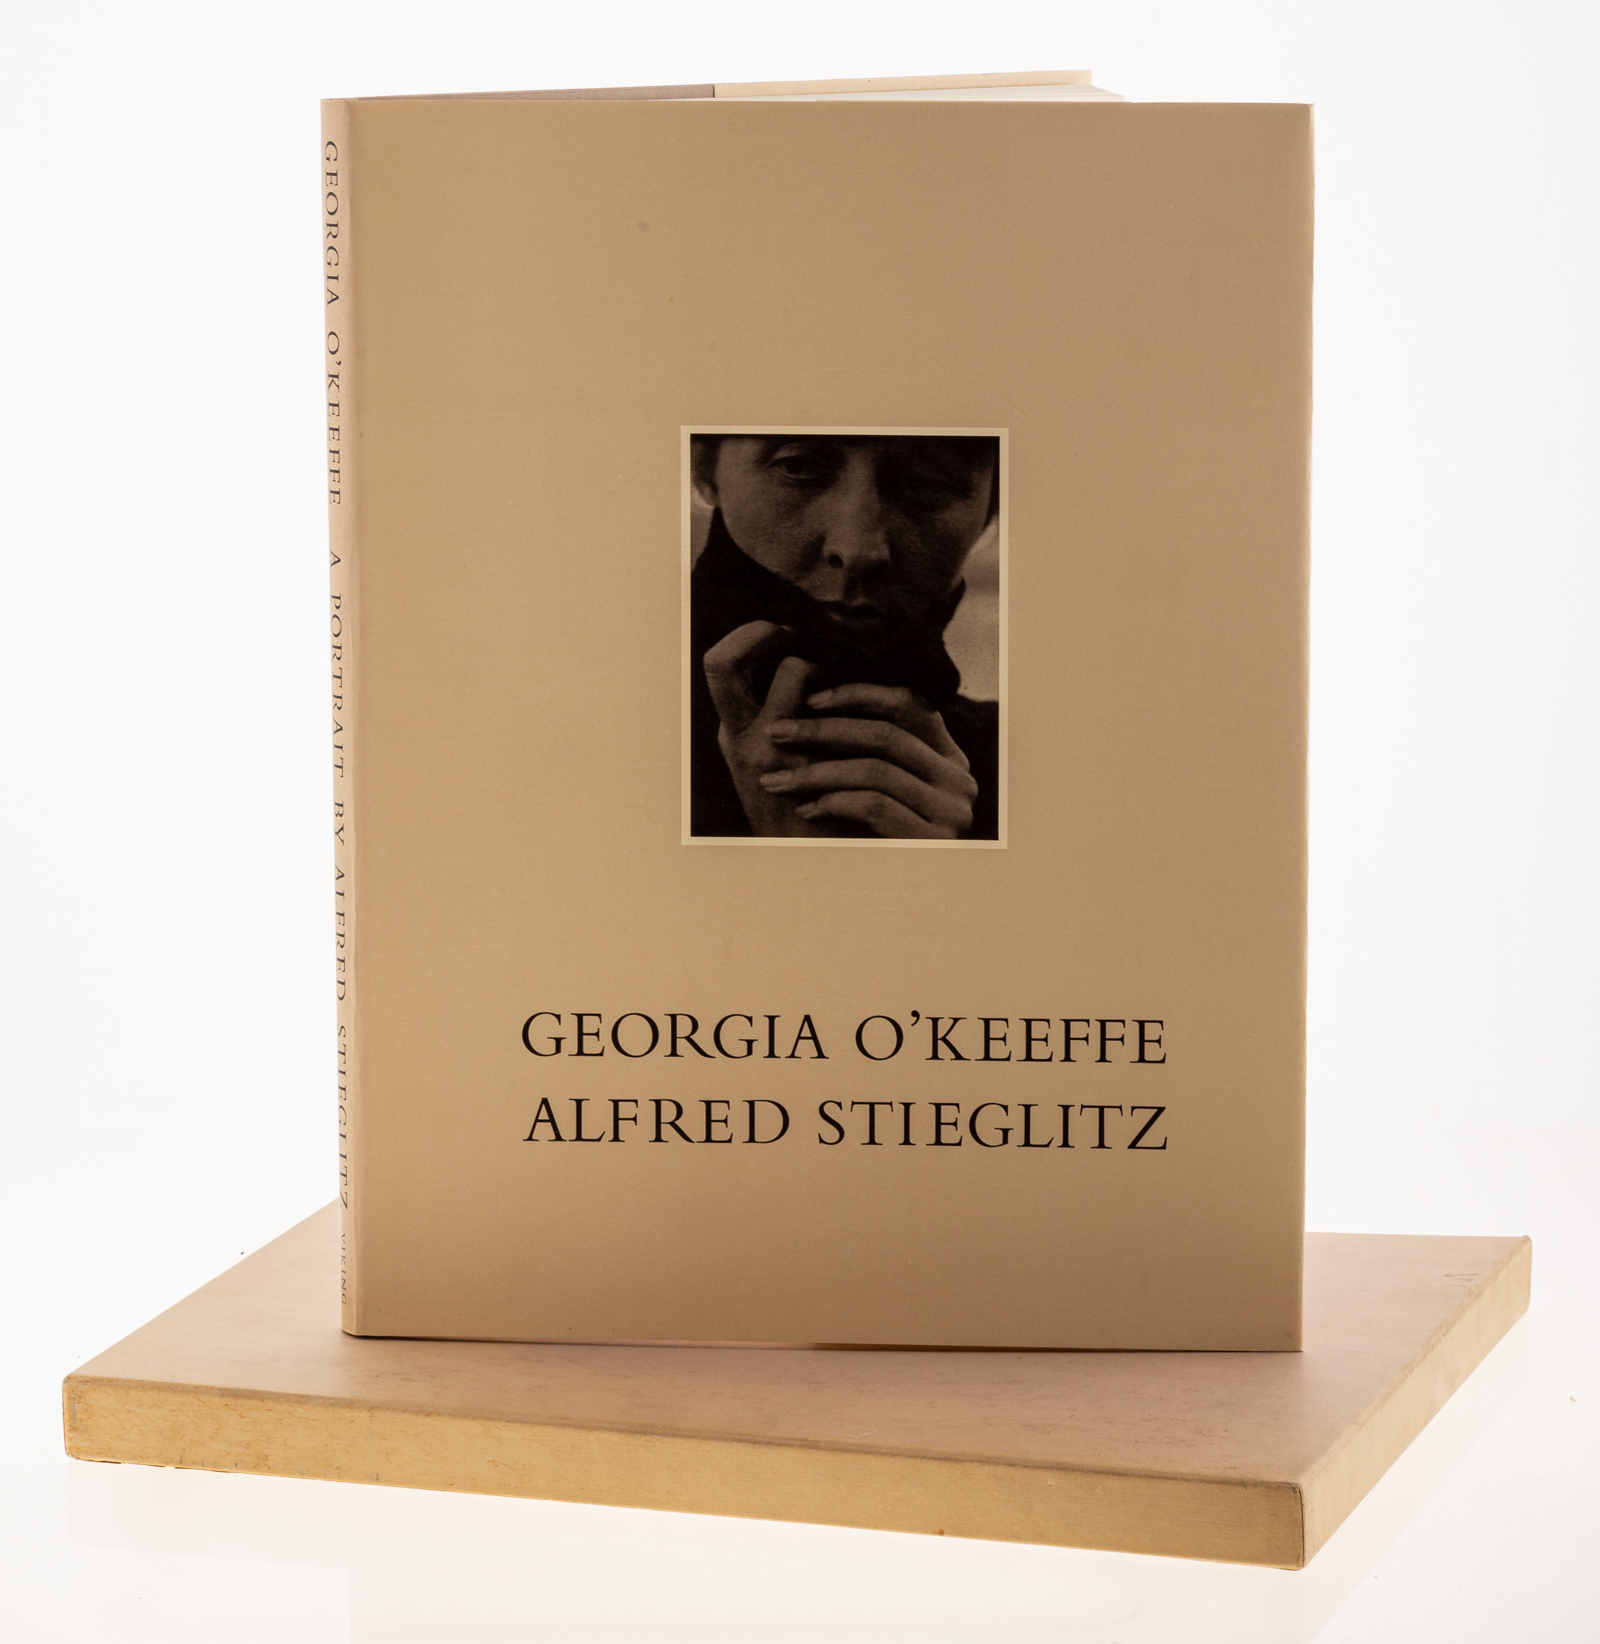 "GEORGIA O'KEEFFE: A PORTRAIT BY